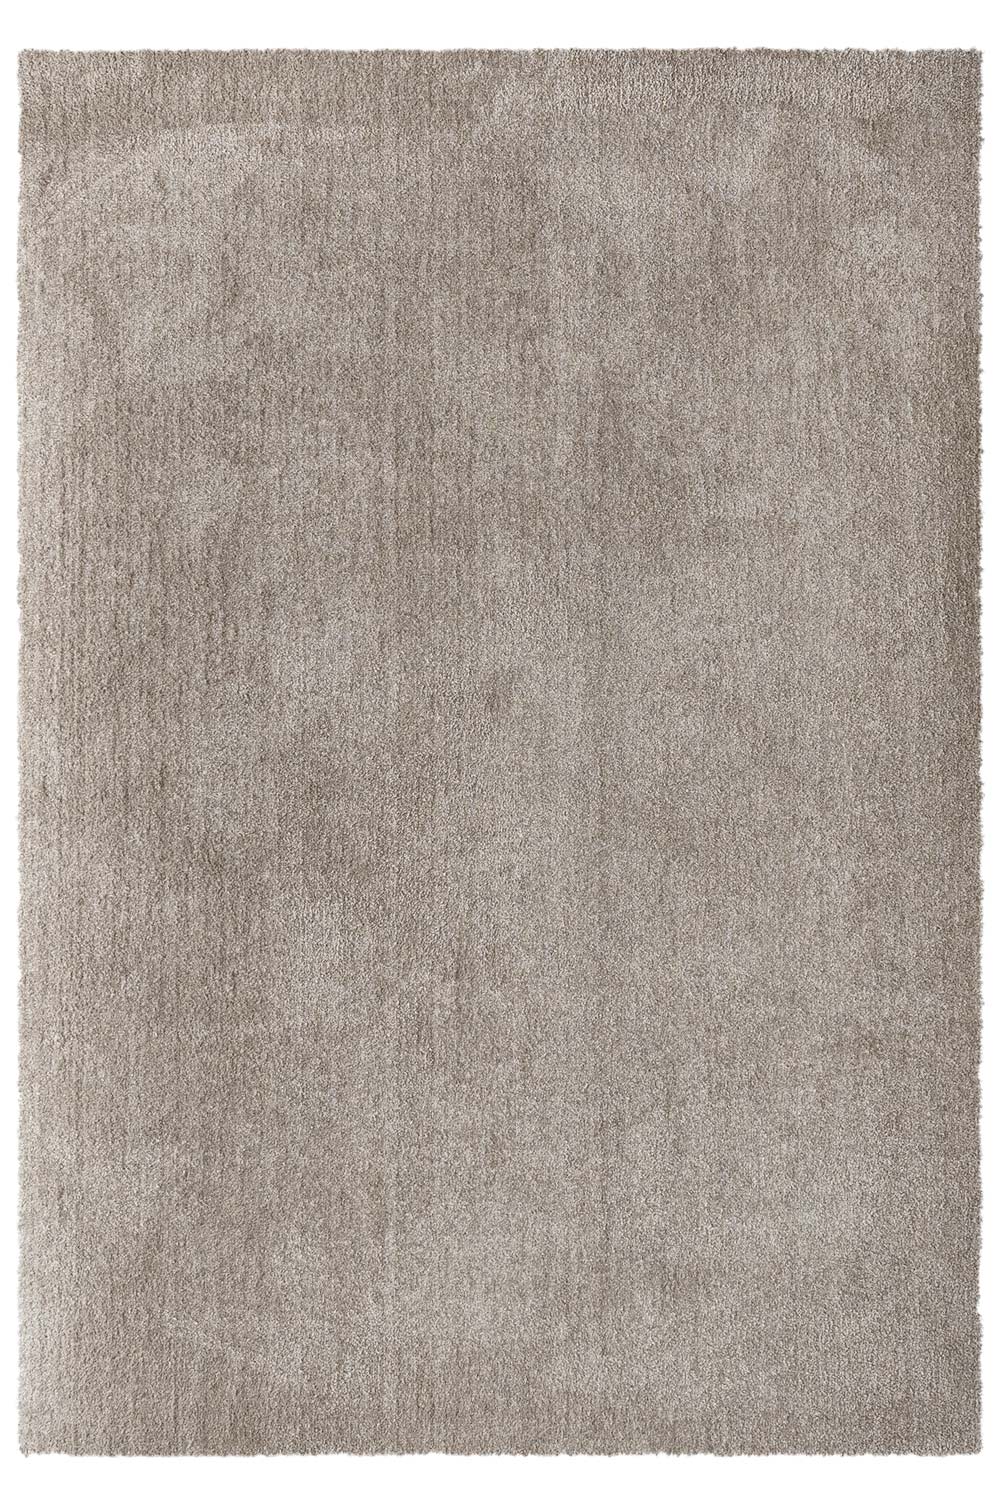 Kusový koberec Labrador 71351 050 Beige 60x115 cm